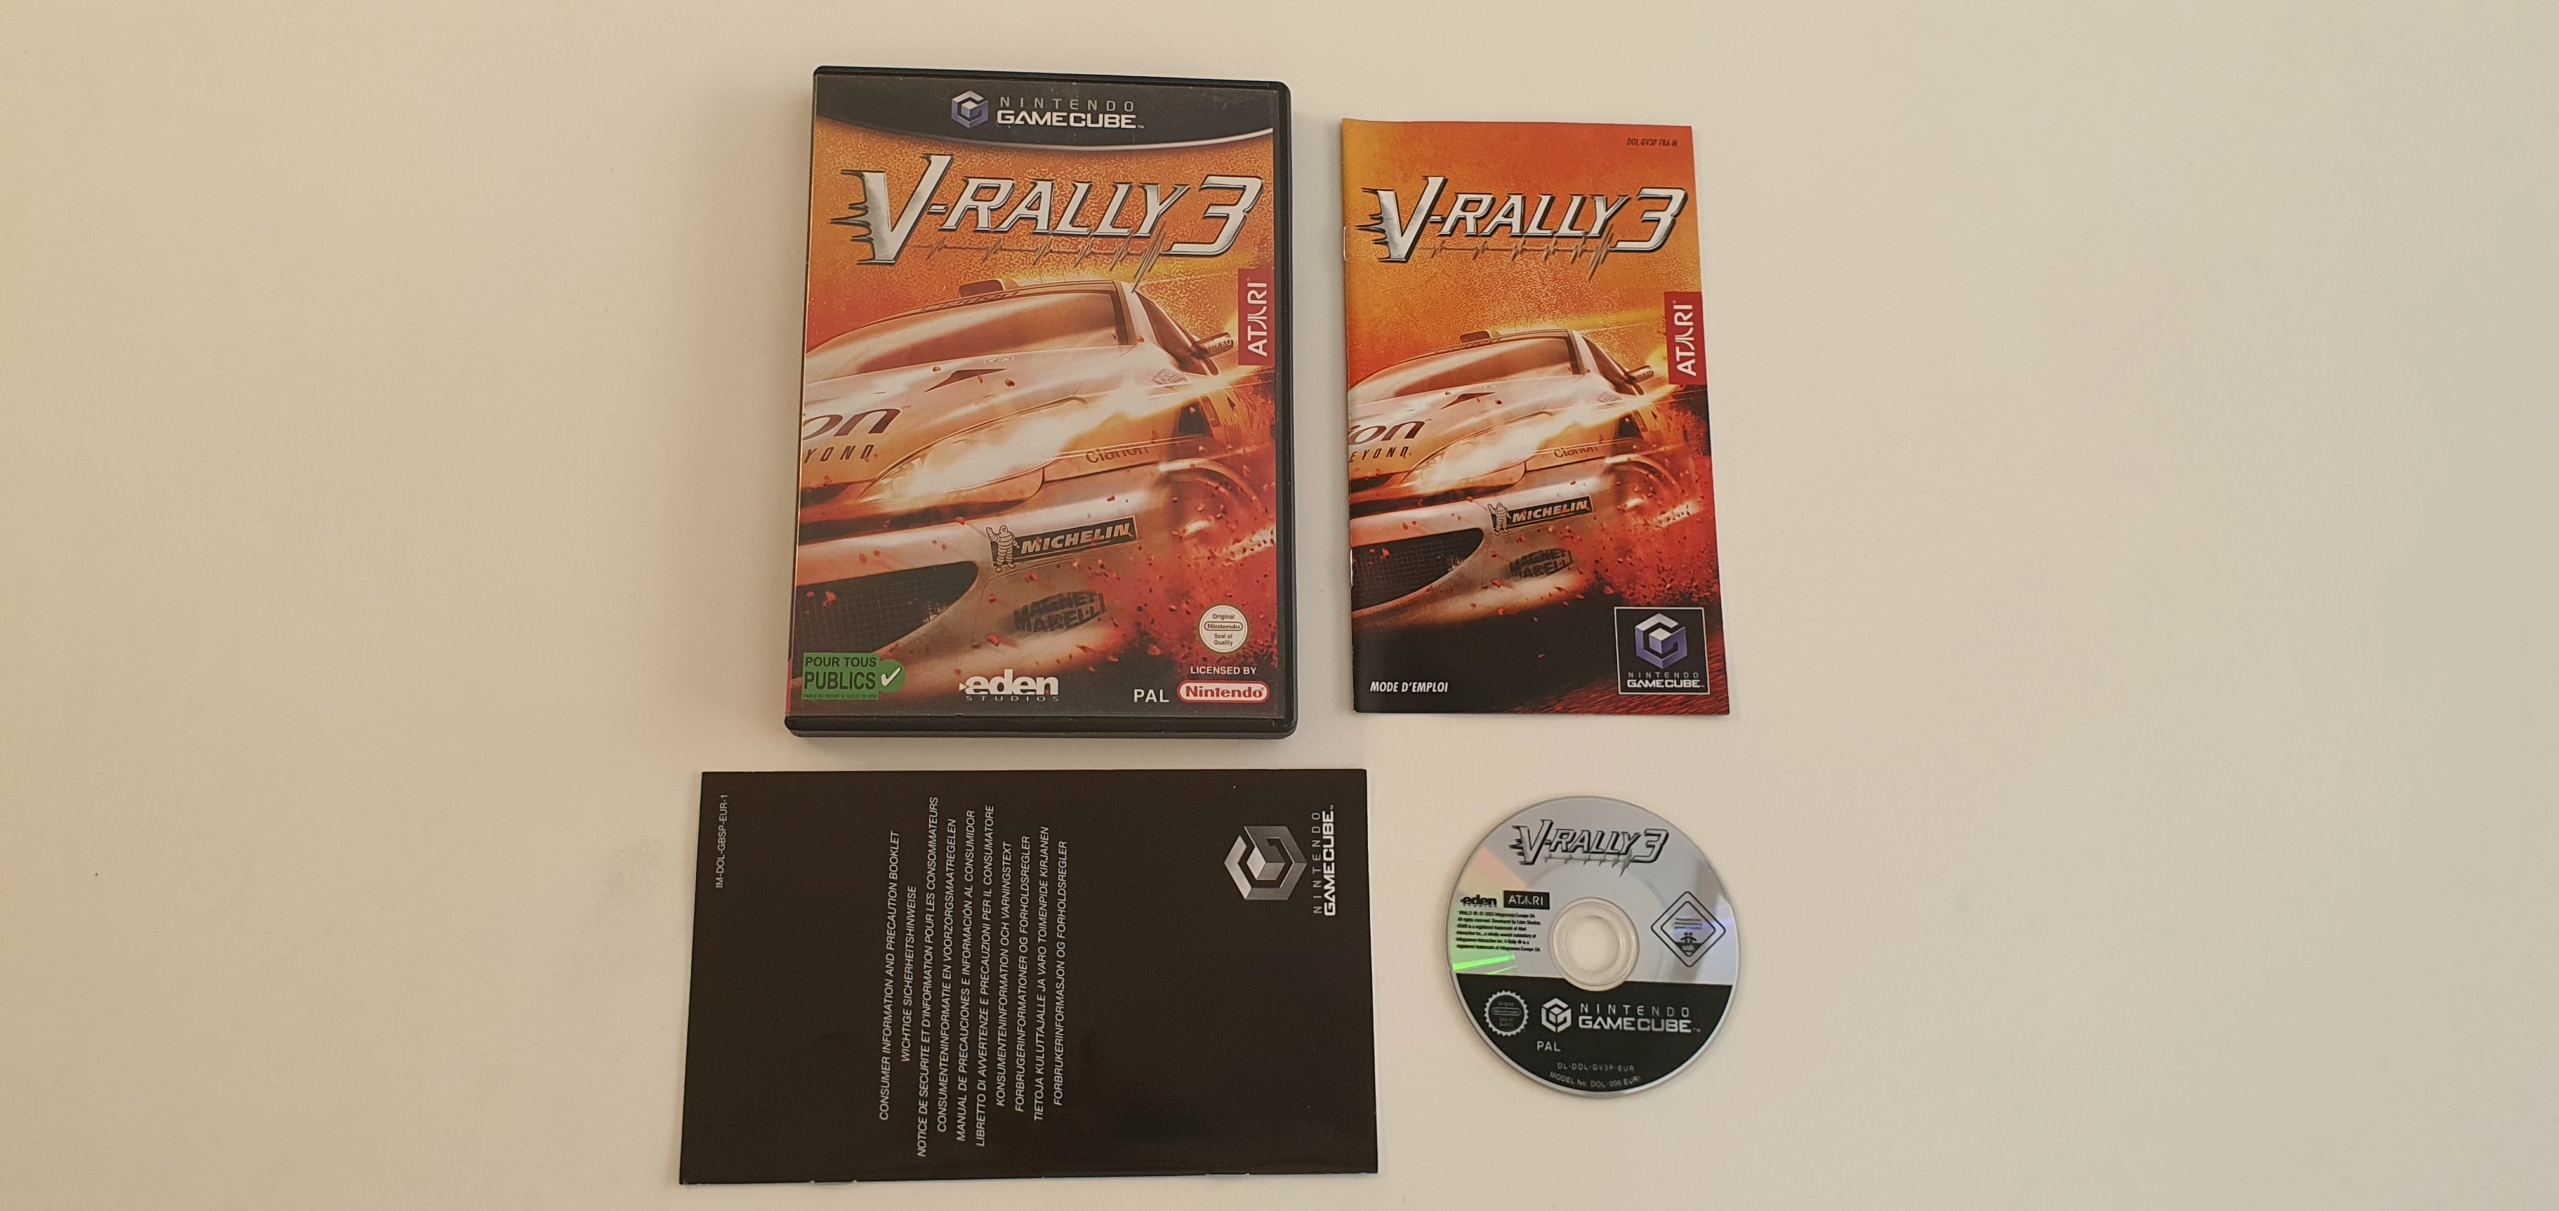 Dadou's Collection - Ajout de 4 jeux Wii U V-rall11